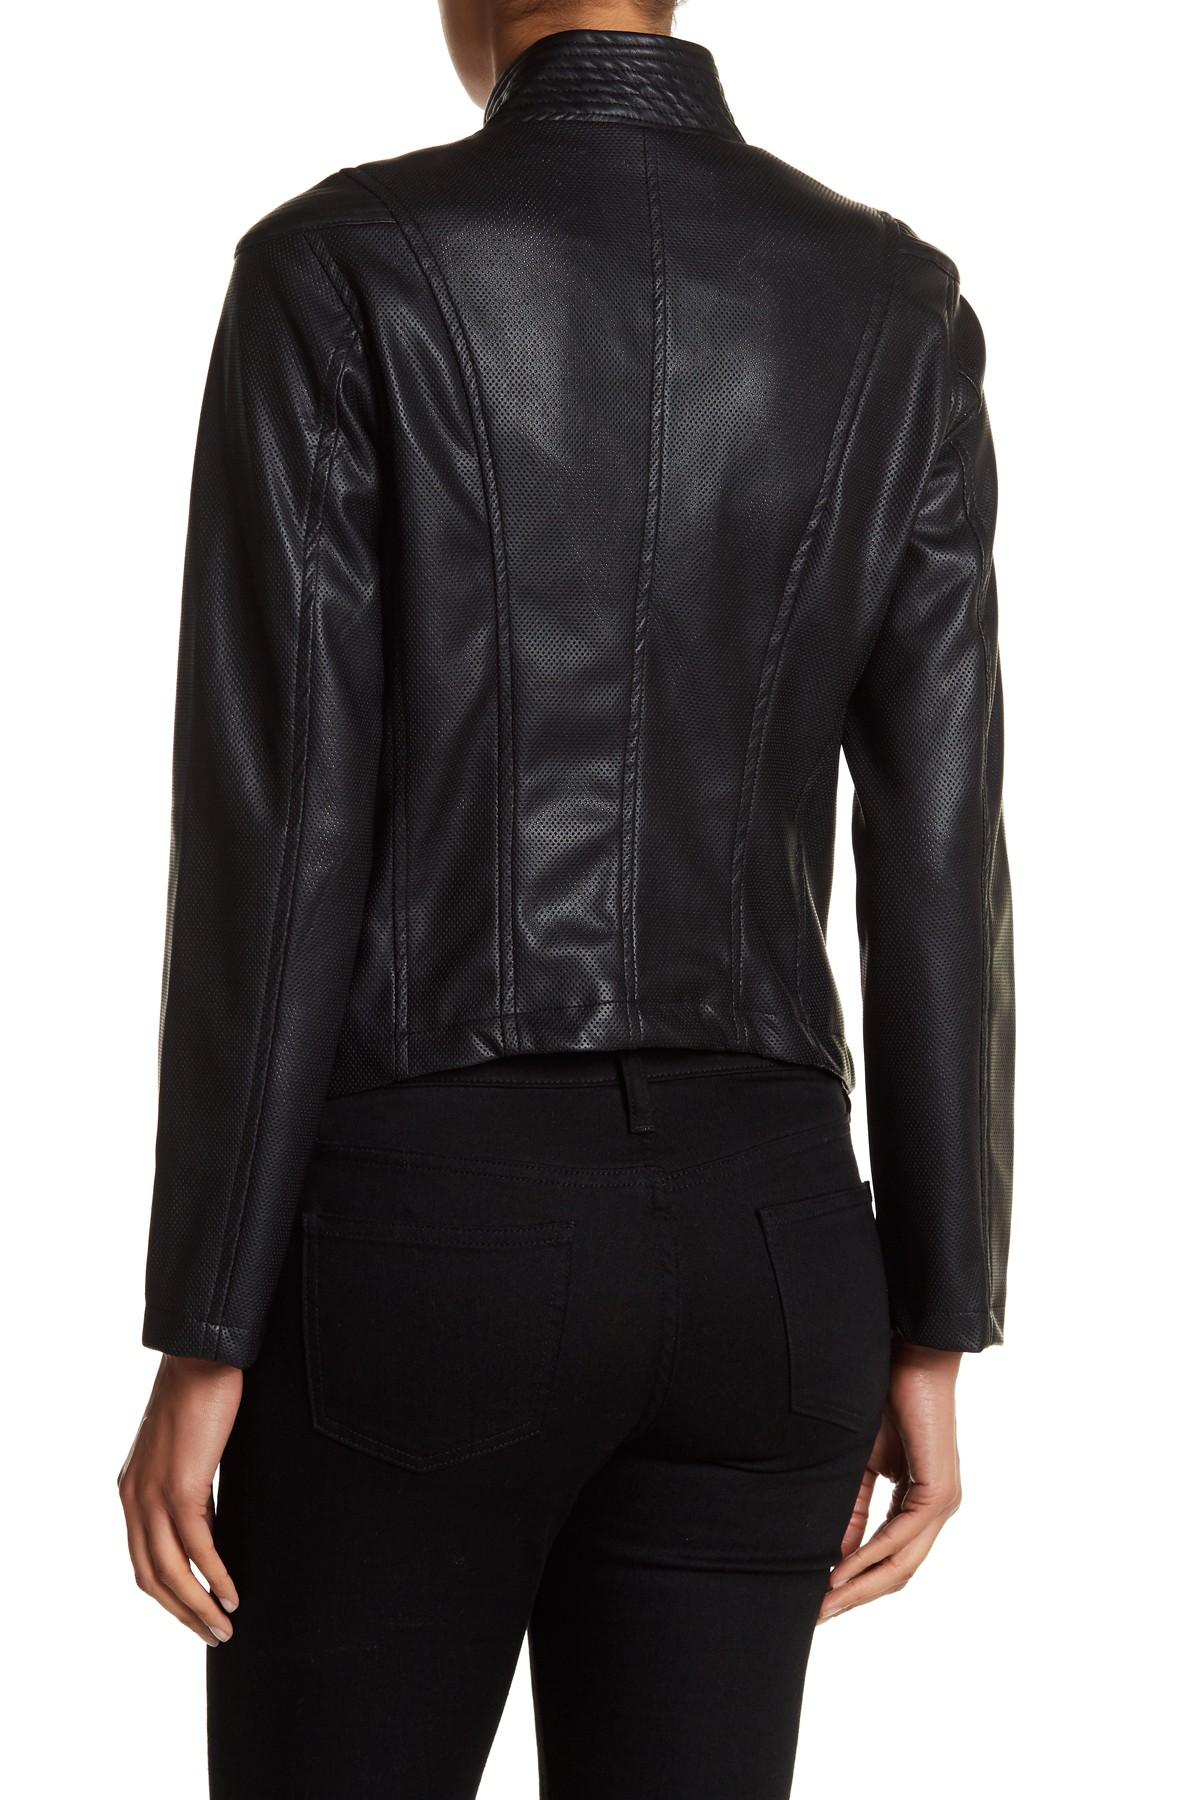 Lyst - Nanette Nanette Lepore Faux Leather Military Jacket in Black